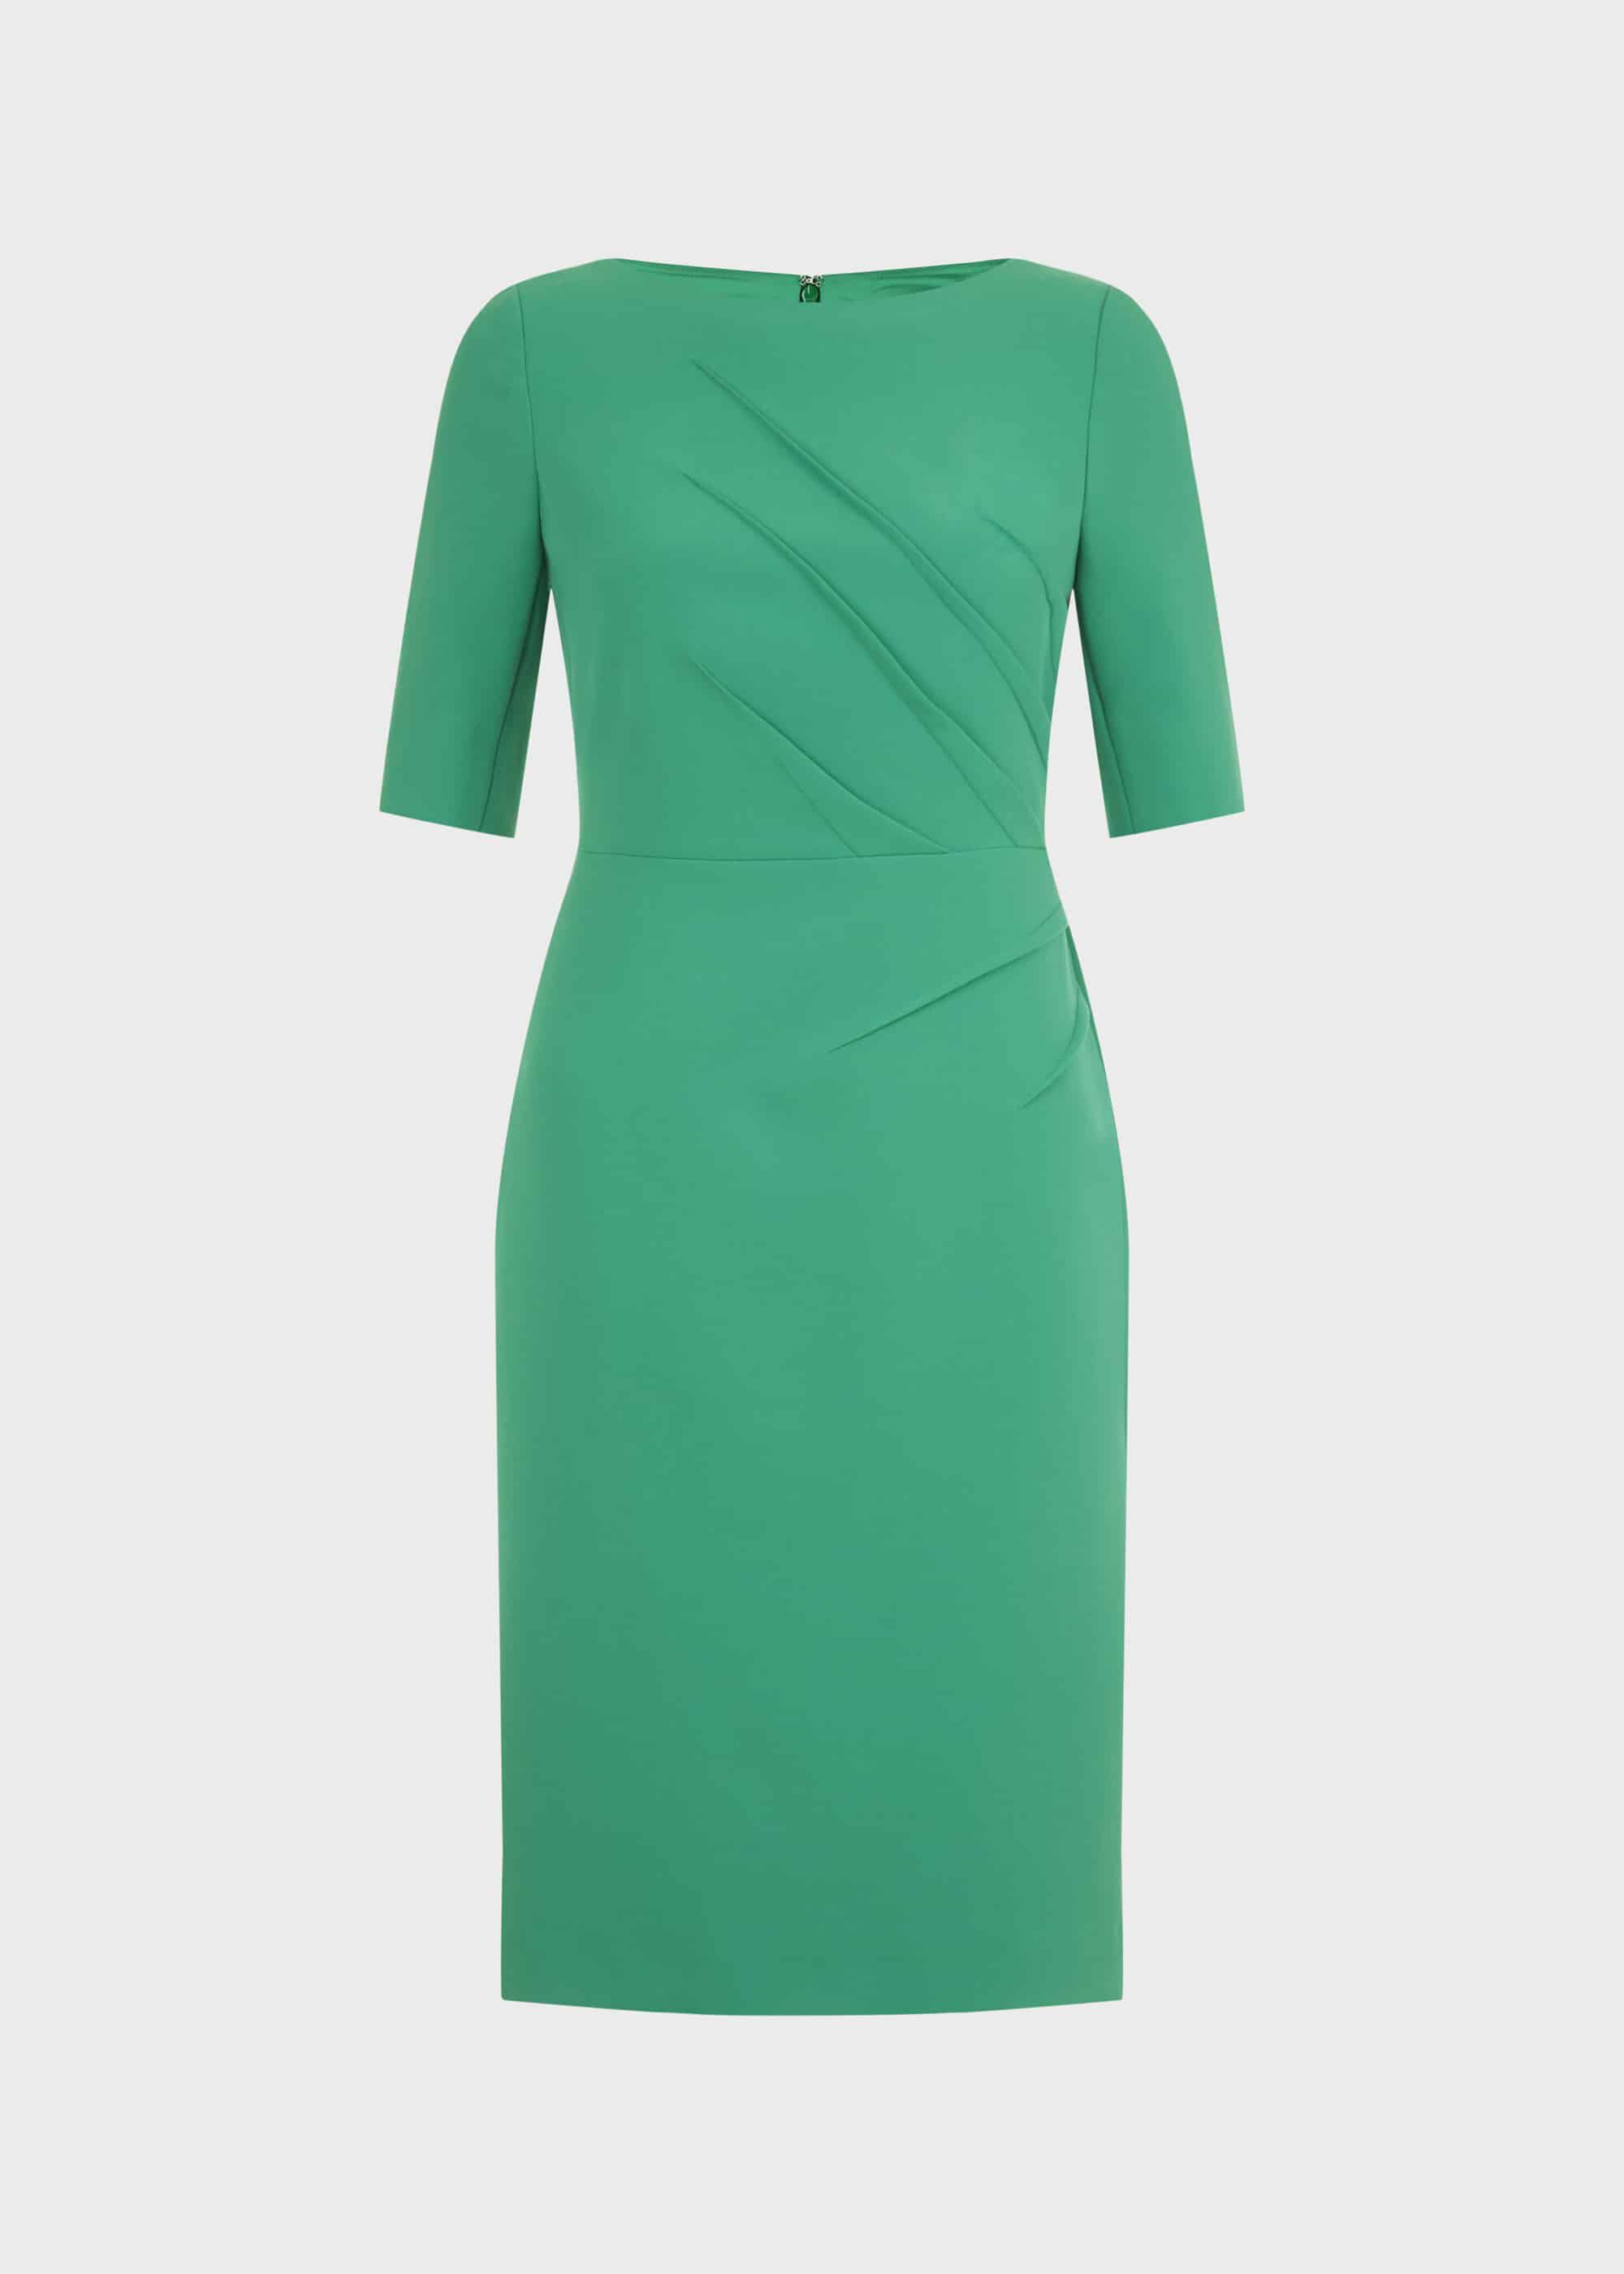 hobbs green dress sale